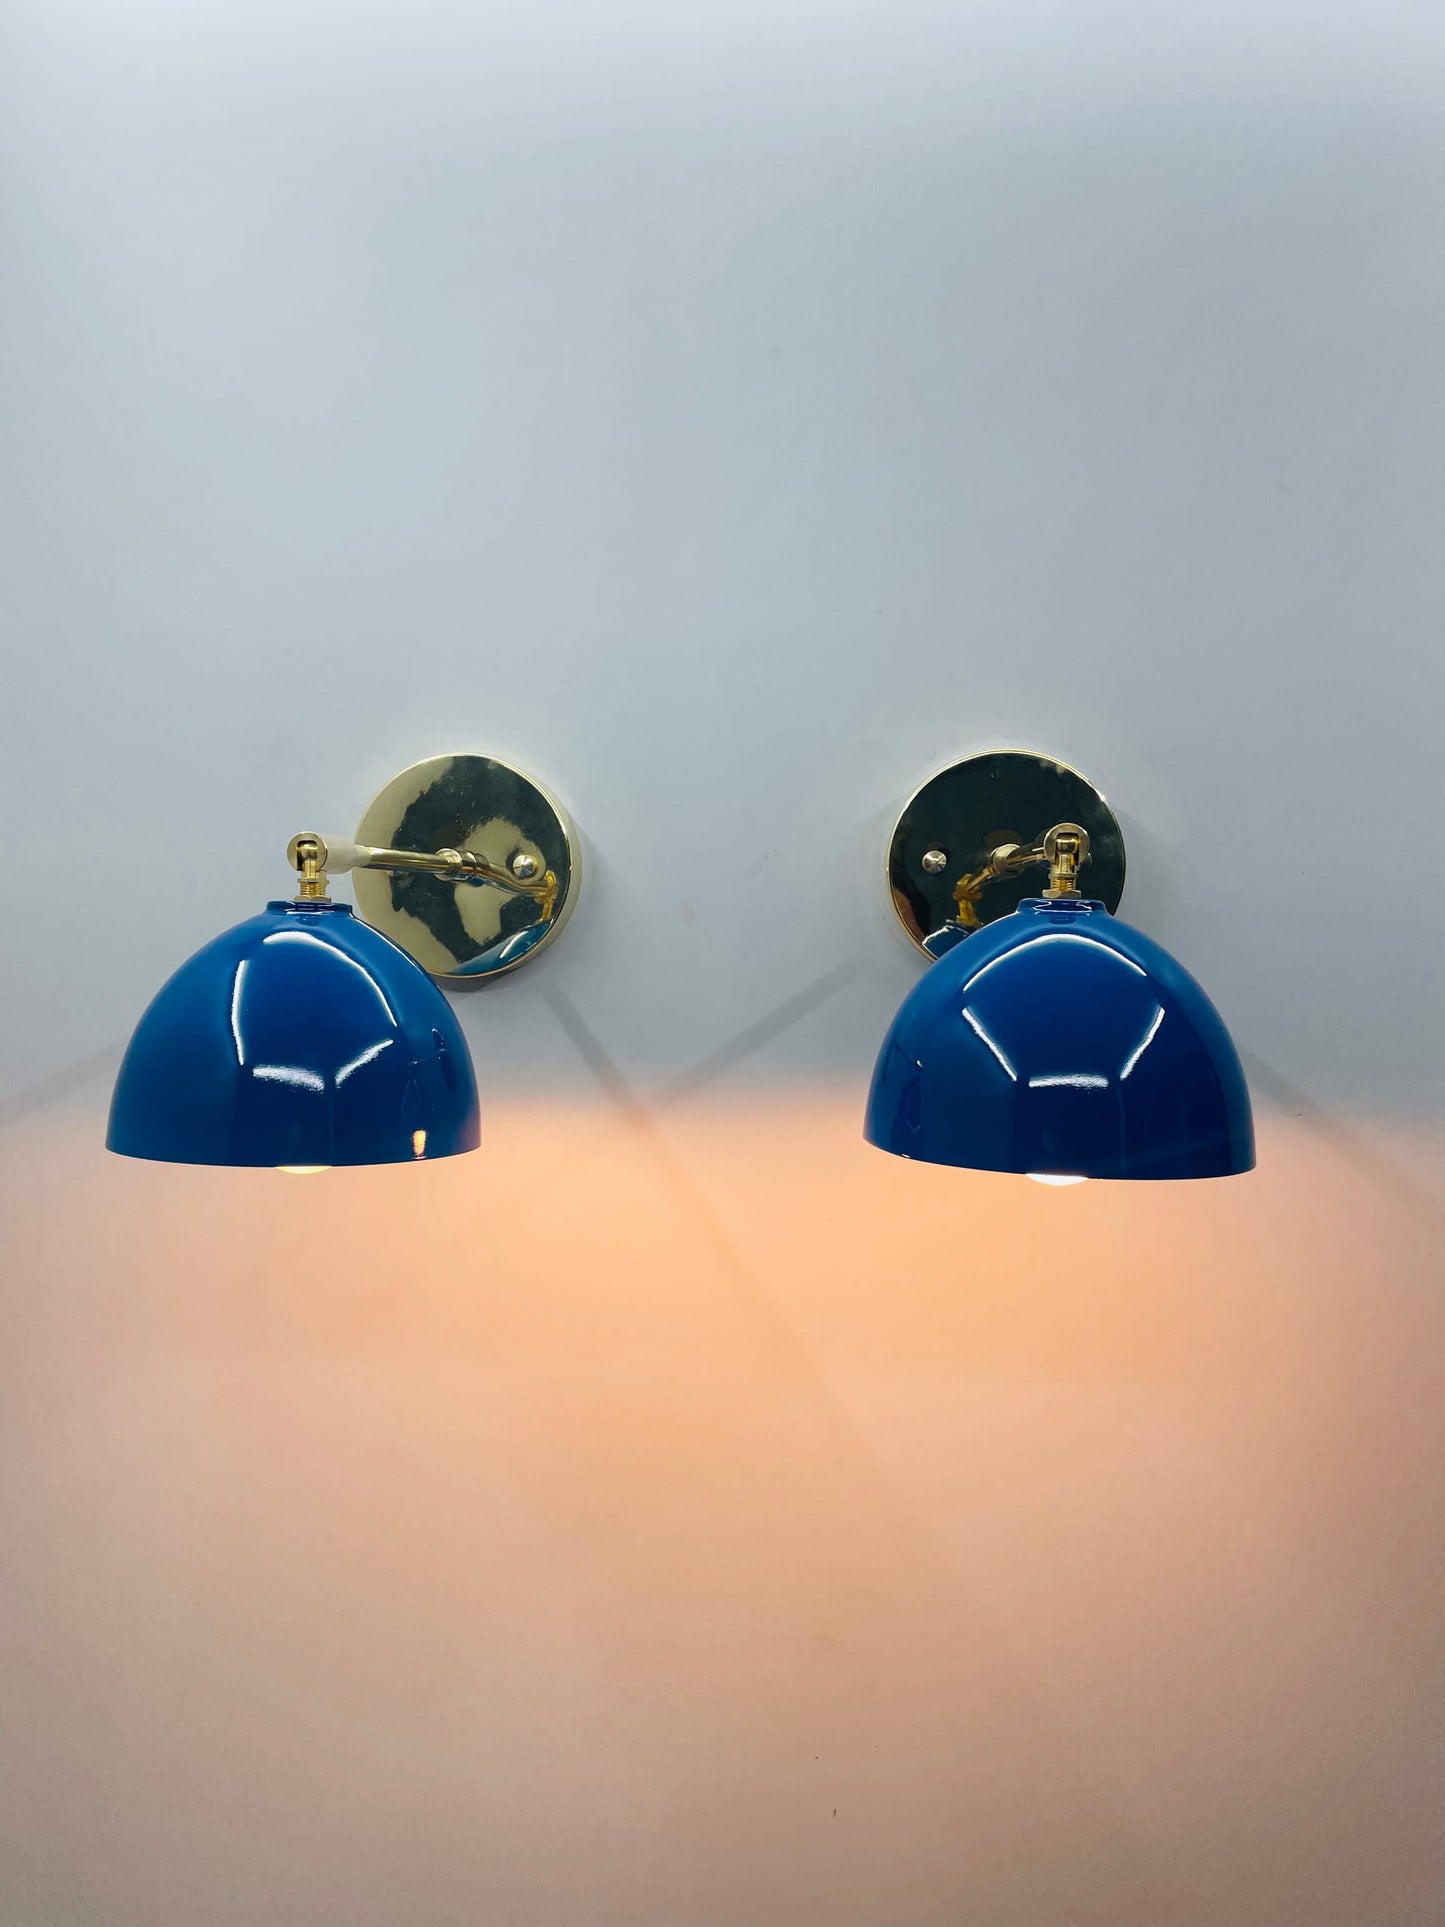 Distinctive Pair of Vintage Plug-In Sconce Lamps - Modern Light Fixtures